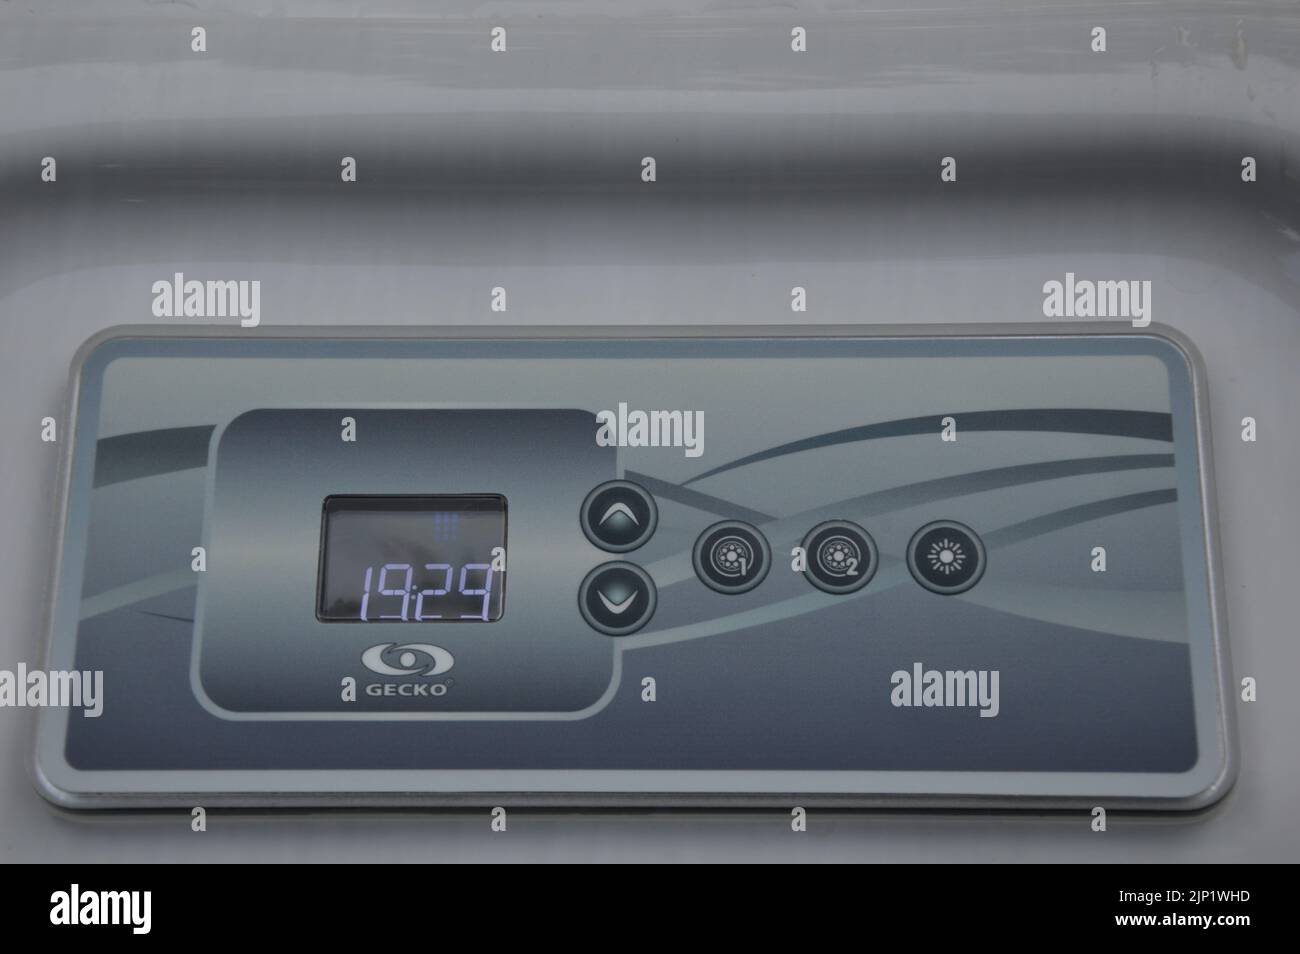 Cecko Spa, Hot tub digital control panel. Stock Photo